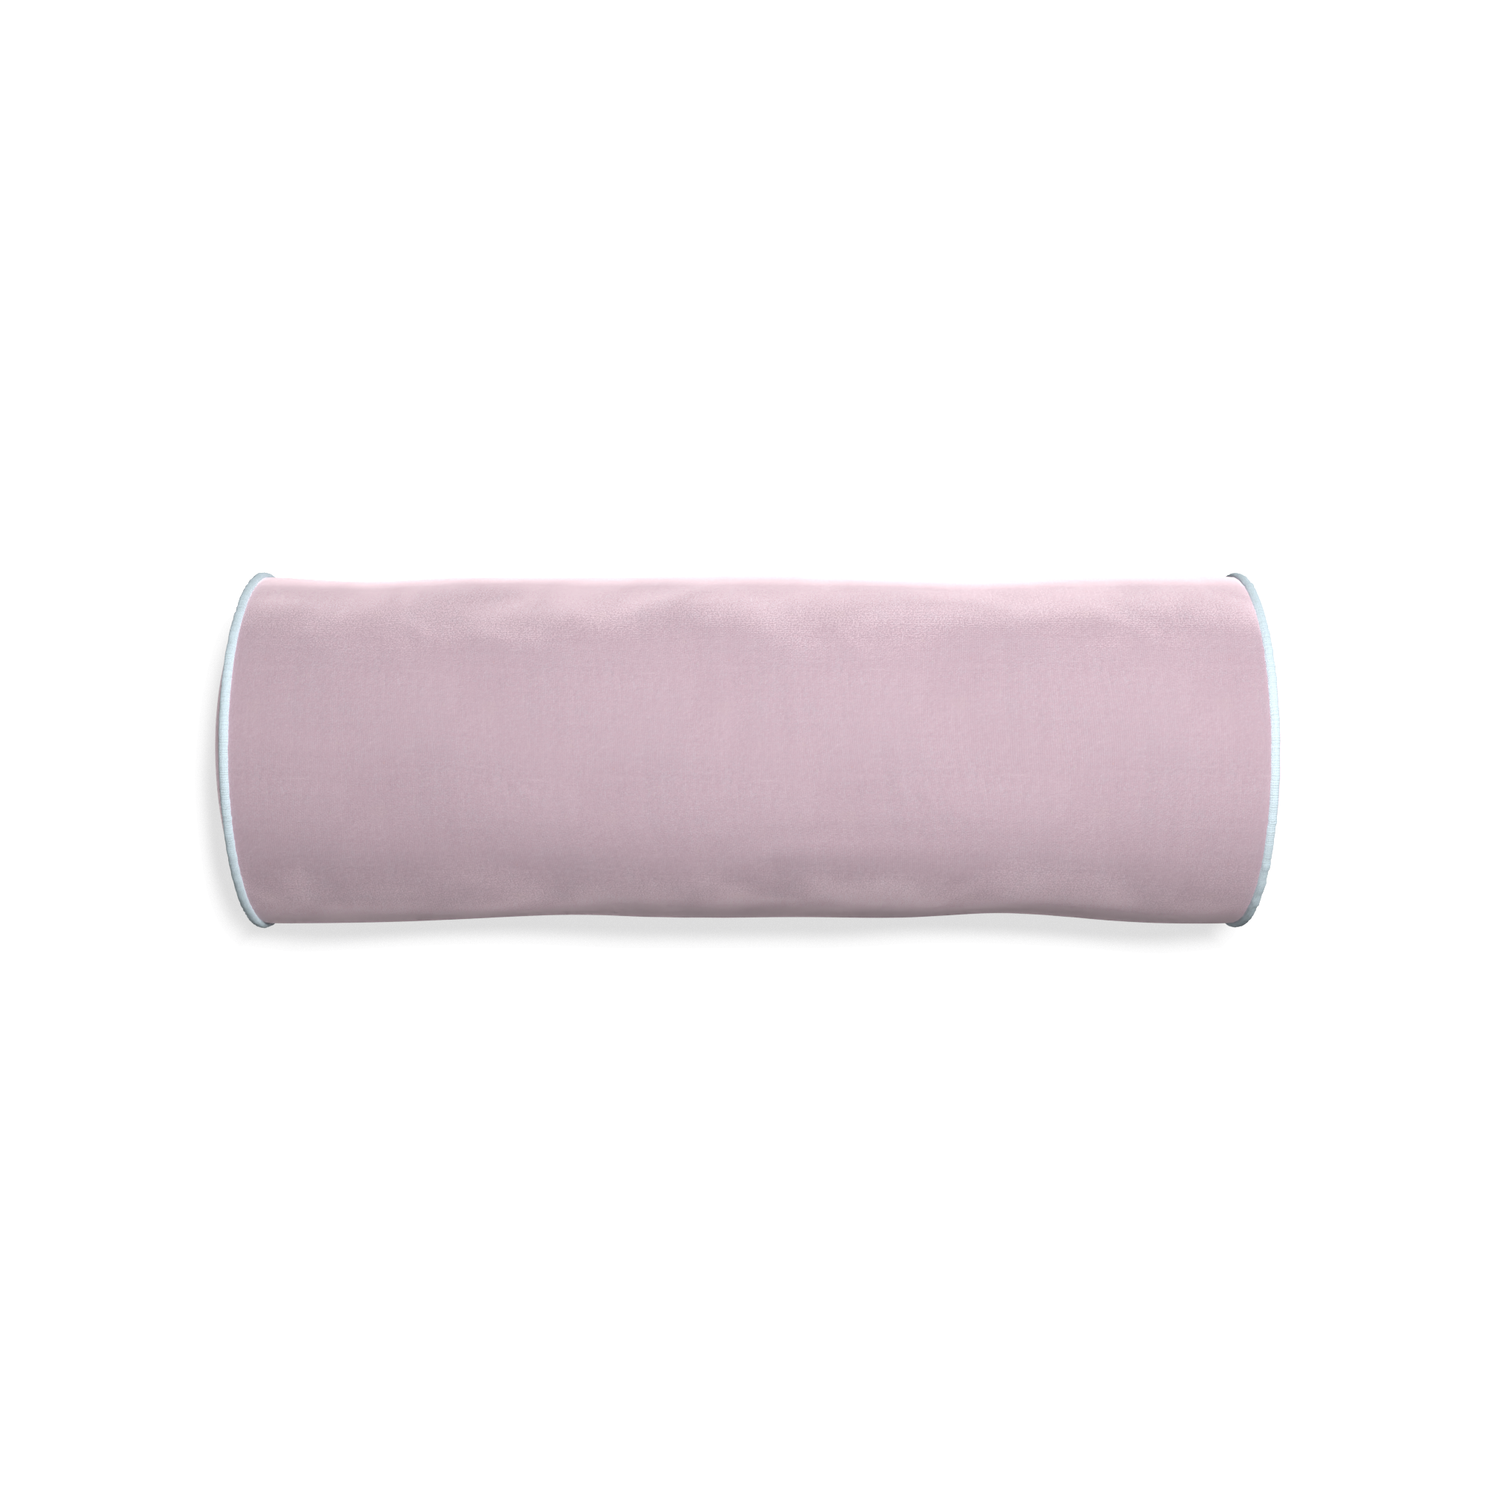 Bolster lilac velvet custom pillow with powder piping on white background